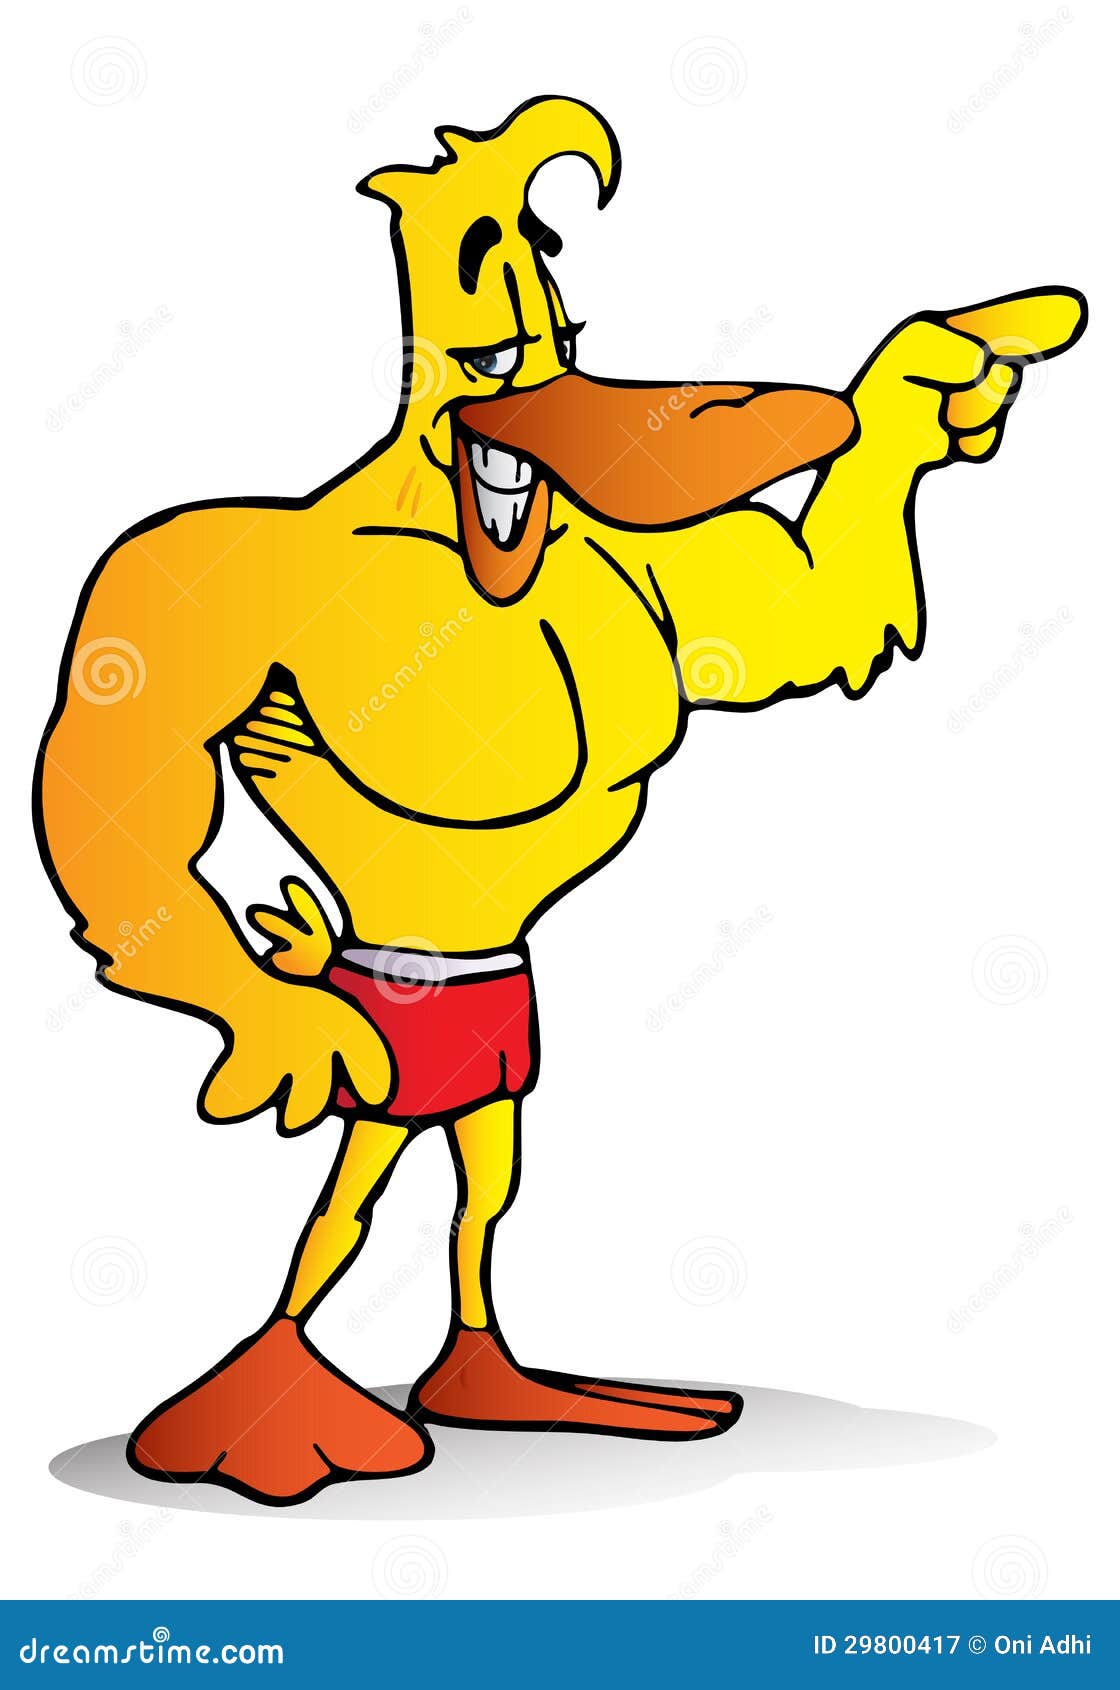 macho duck pointing